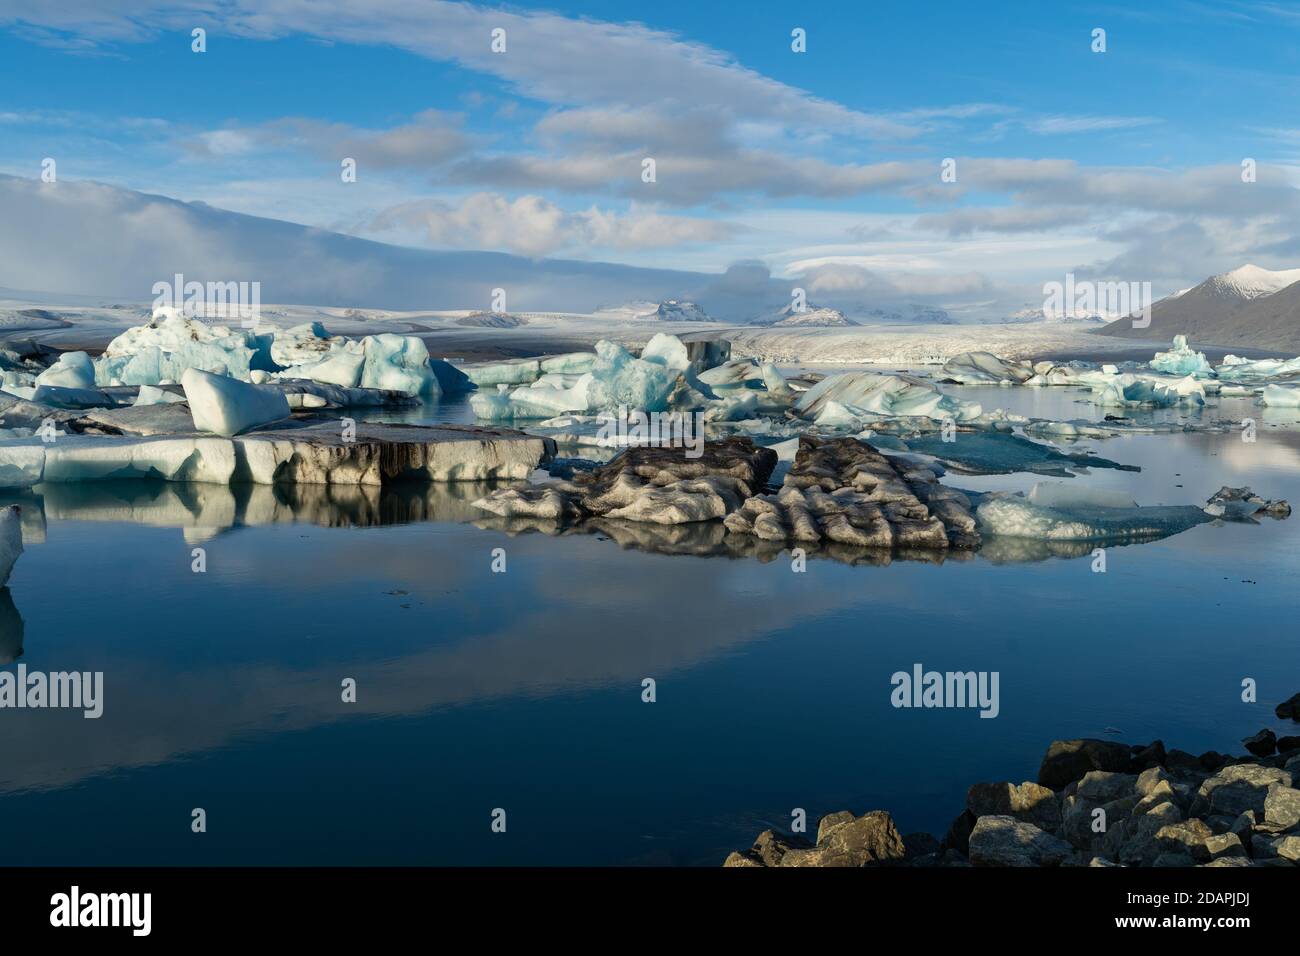 Amazing iceberg formations at Jokulsalron glacier lagoon landscape of Iceland, frozen land showing the climate changes Stock Photo